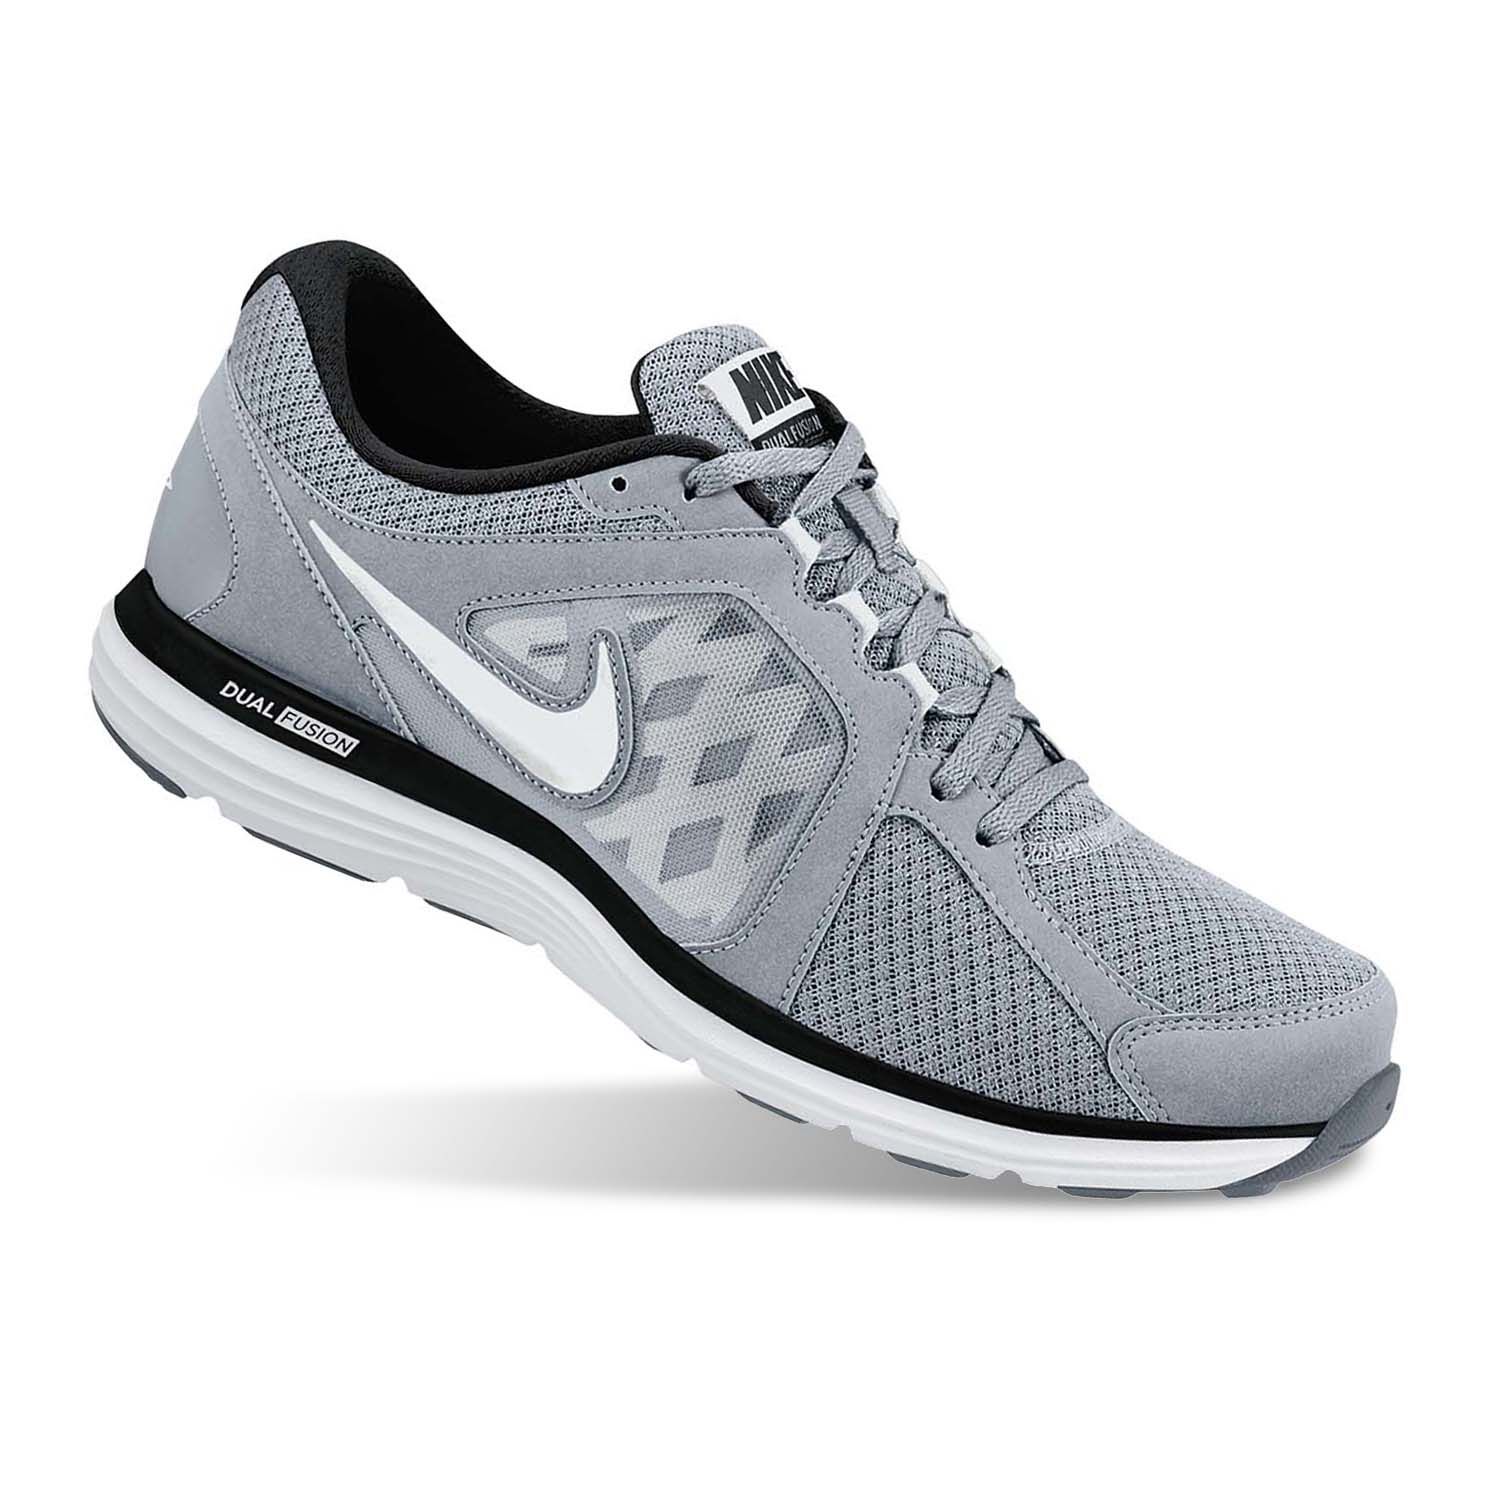 Nike Dual Fusion ST 3 Running Shoes - Men